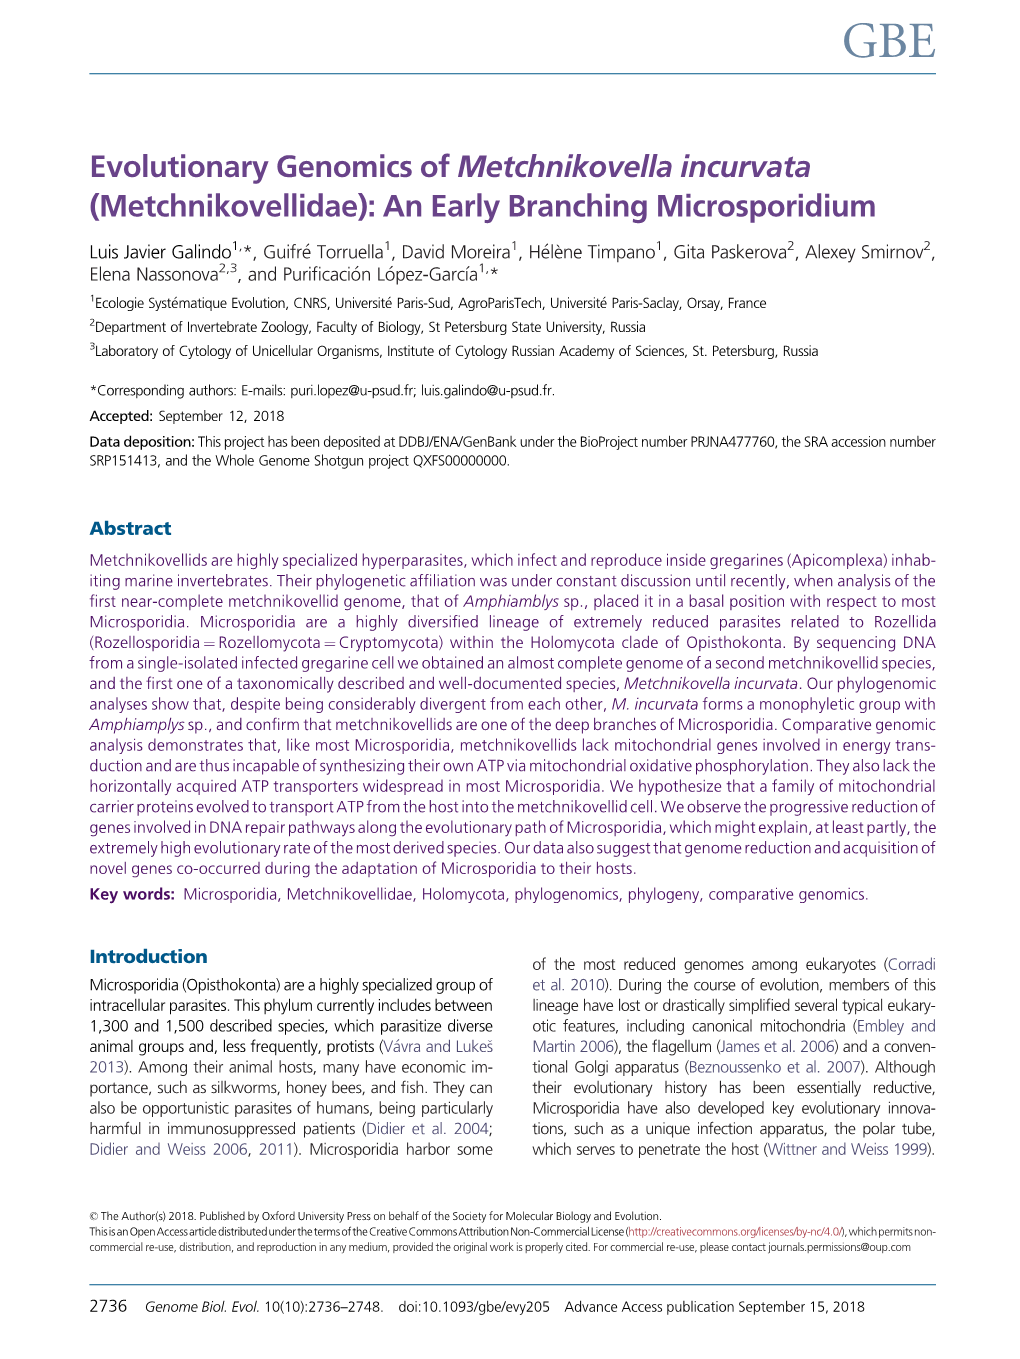 Evolutionary Genomics of Metchnikovella Incurvata (Metchnikovellidae): an Early Branching Microsporidium